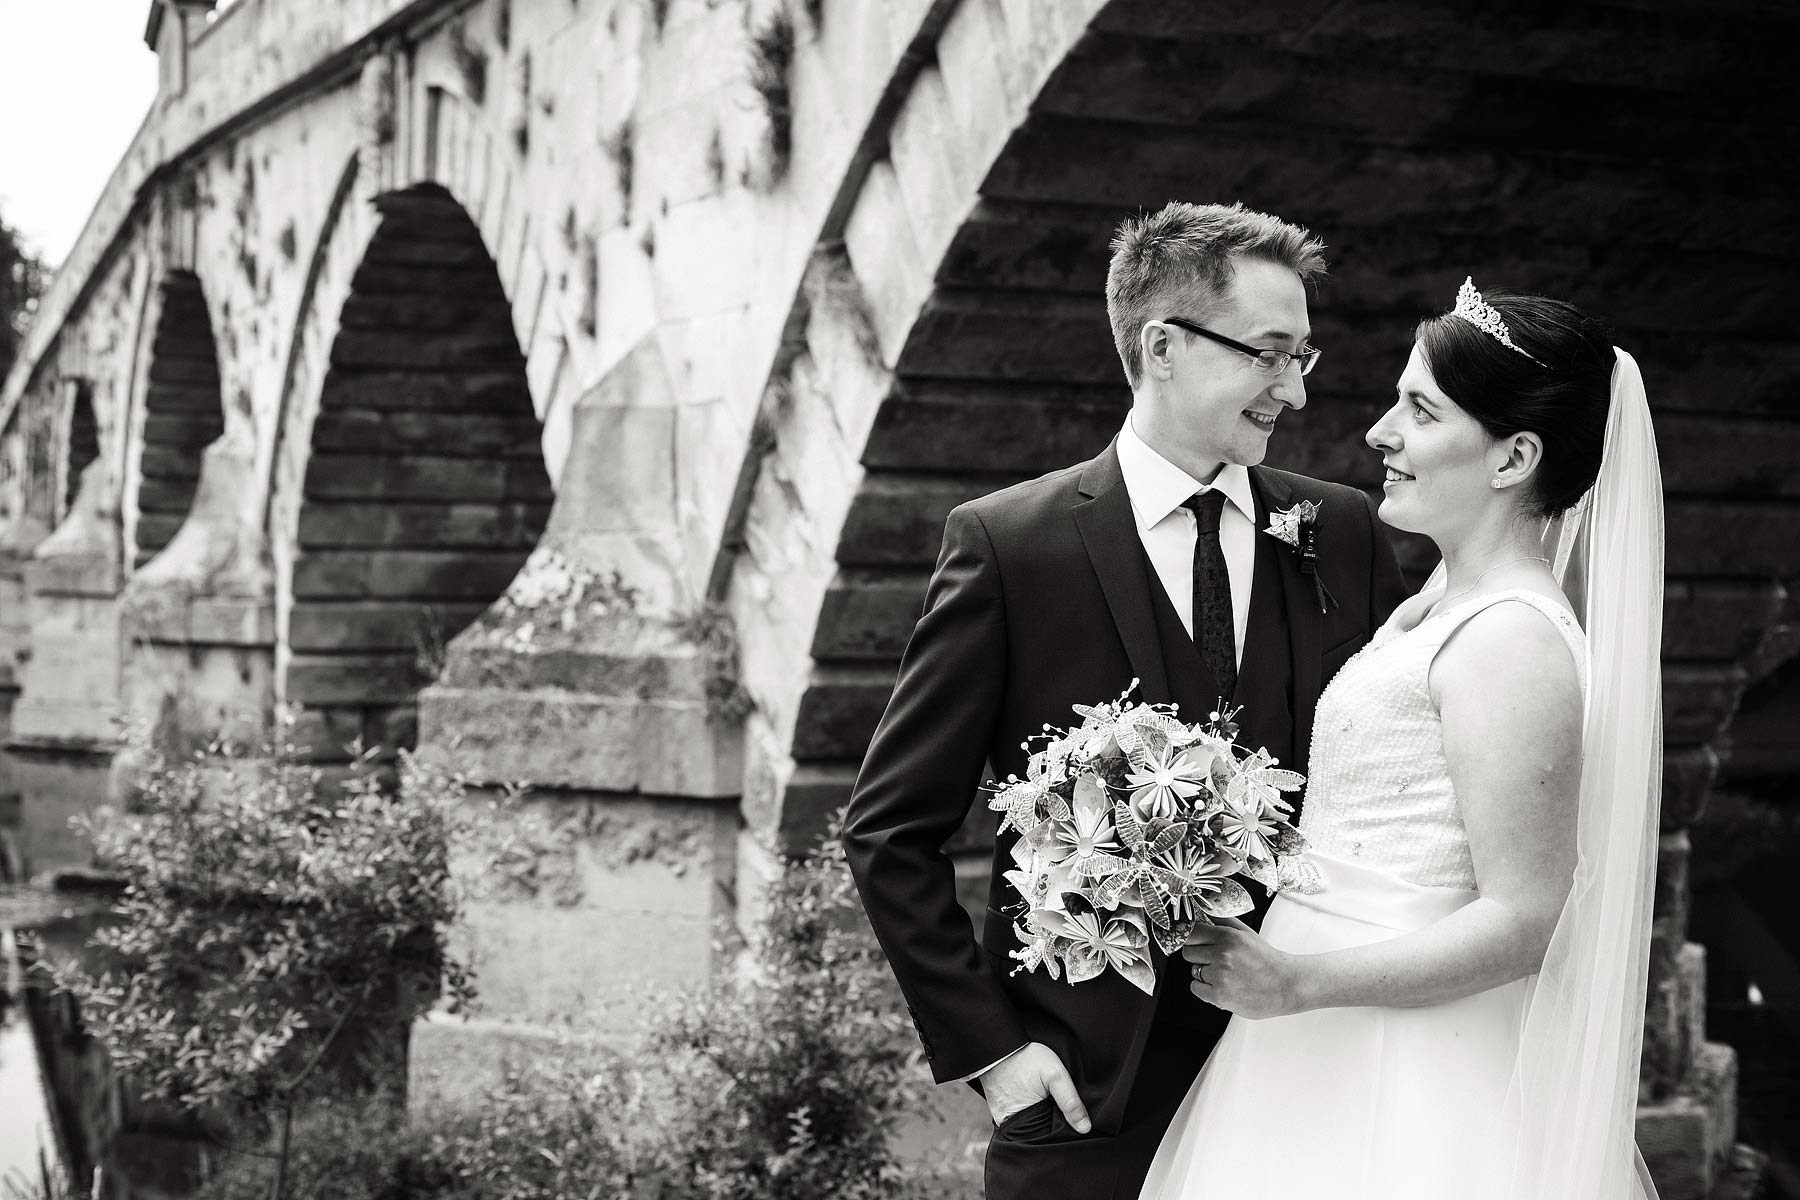 Creative wedding photography by Documentary Wedding Photographer Stuart James at Mytton and Mermaid in Shrewsbury